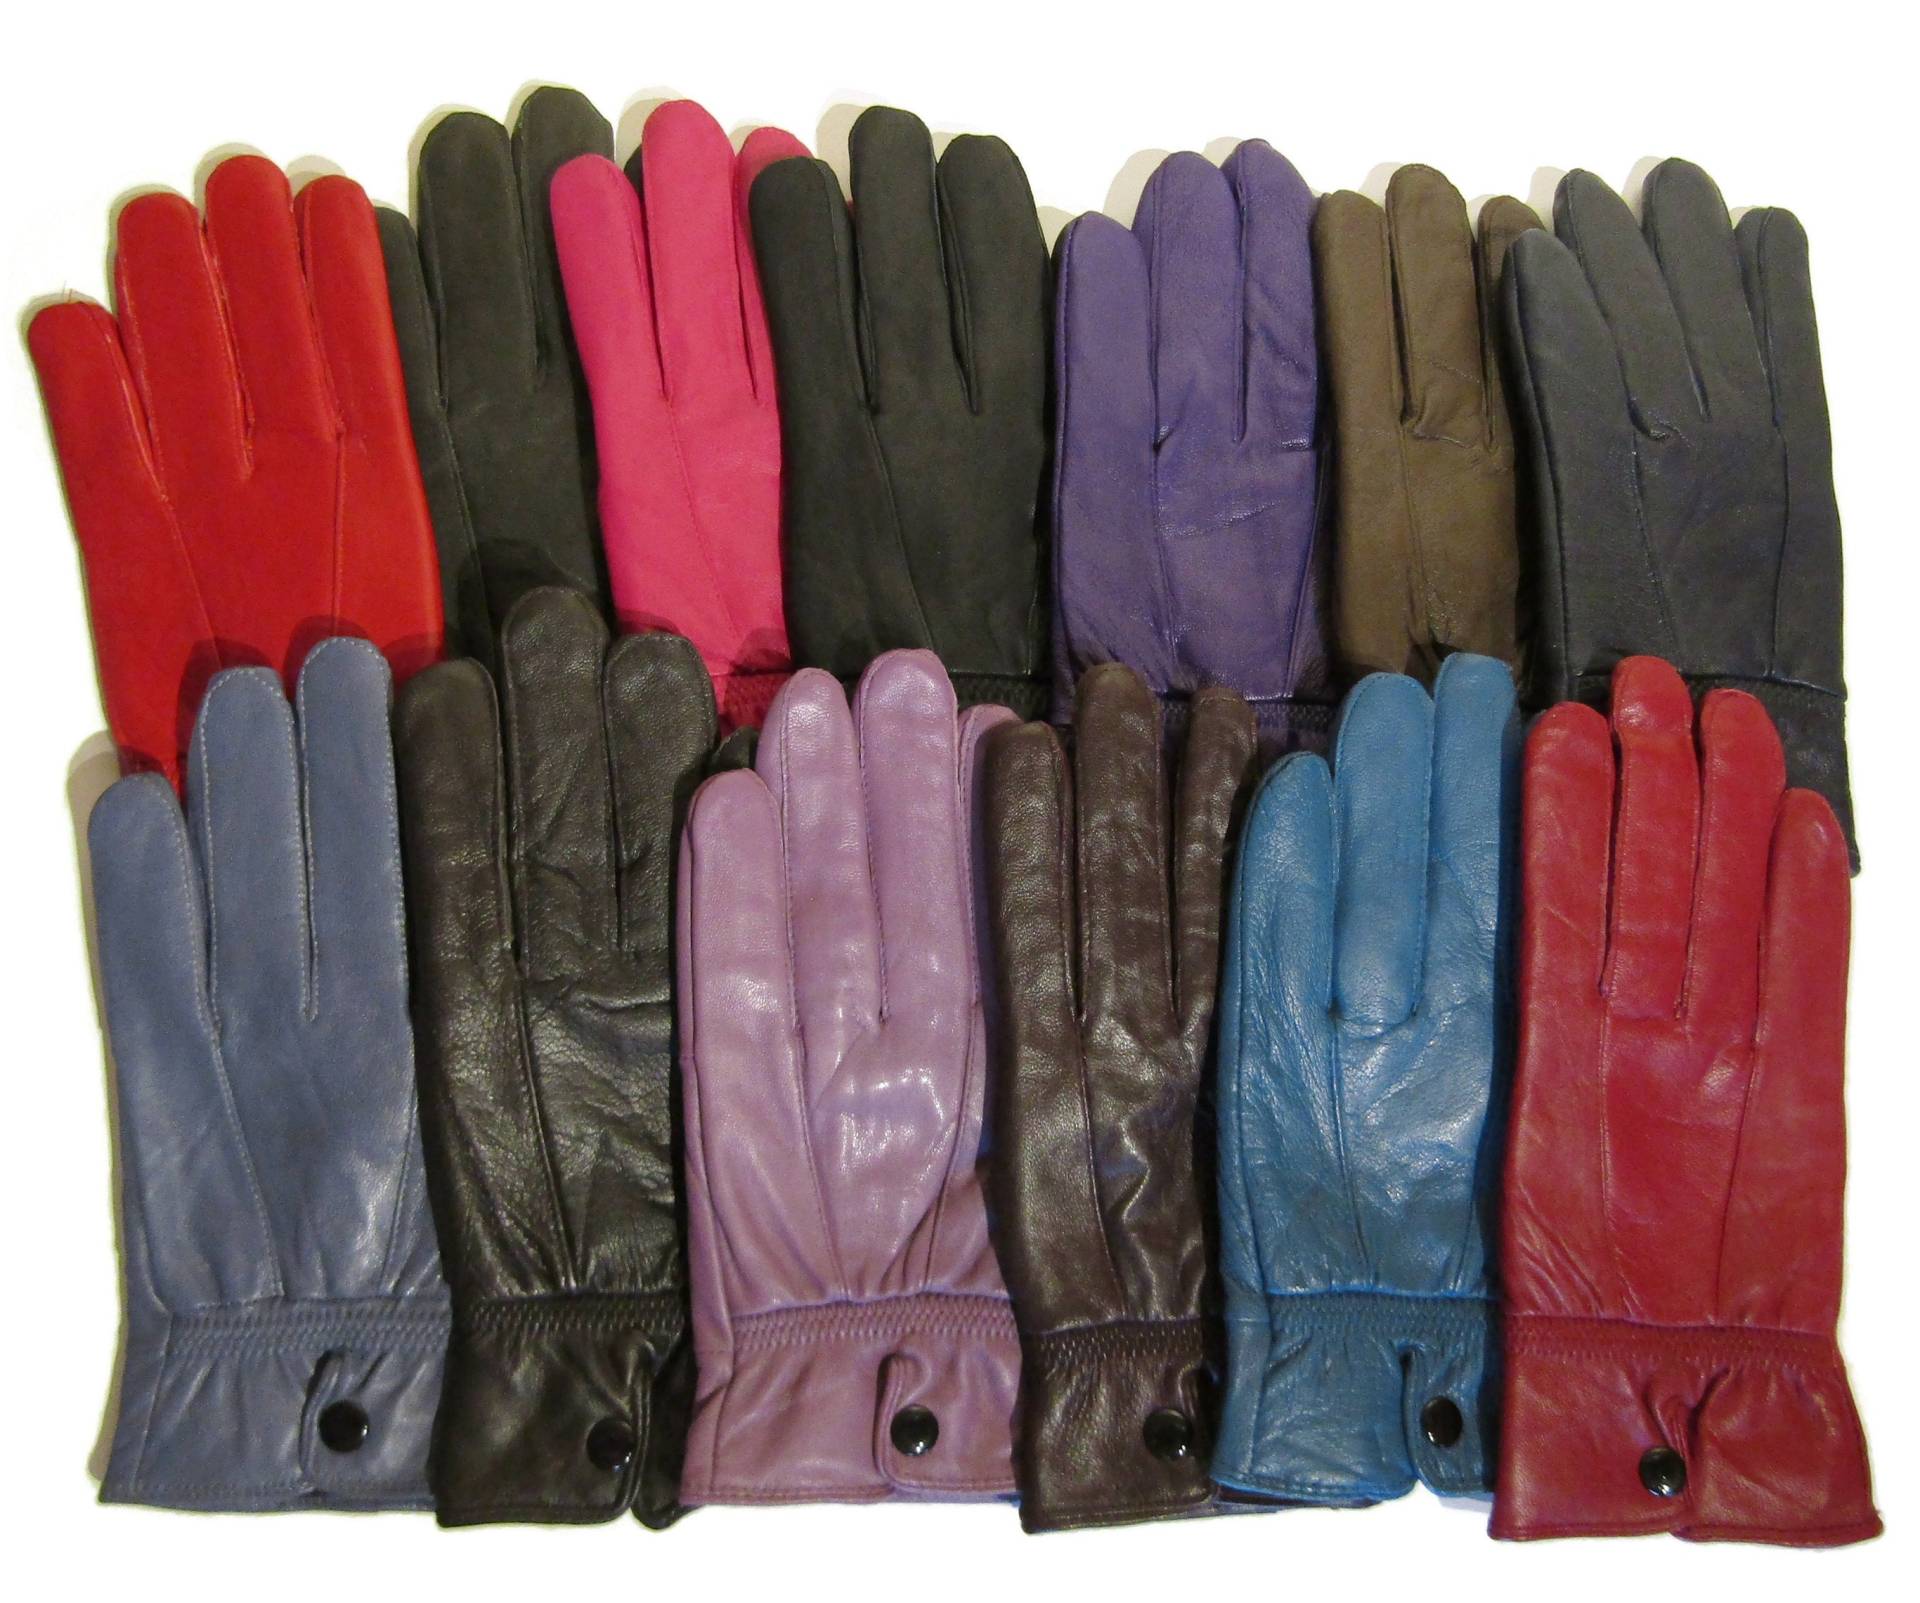 Super Weiche Damen Echtleder Handschuhe Komplett Fleece Gefüttert Winter Fahren Warm von TheGloveHut